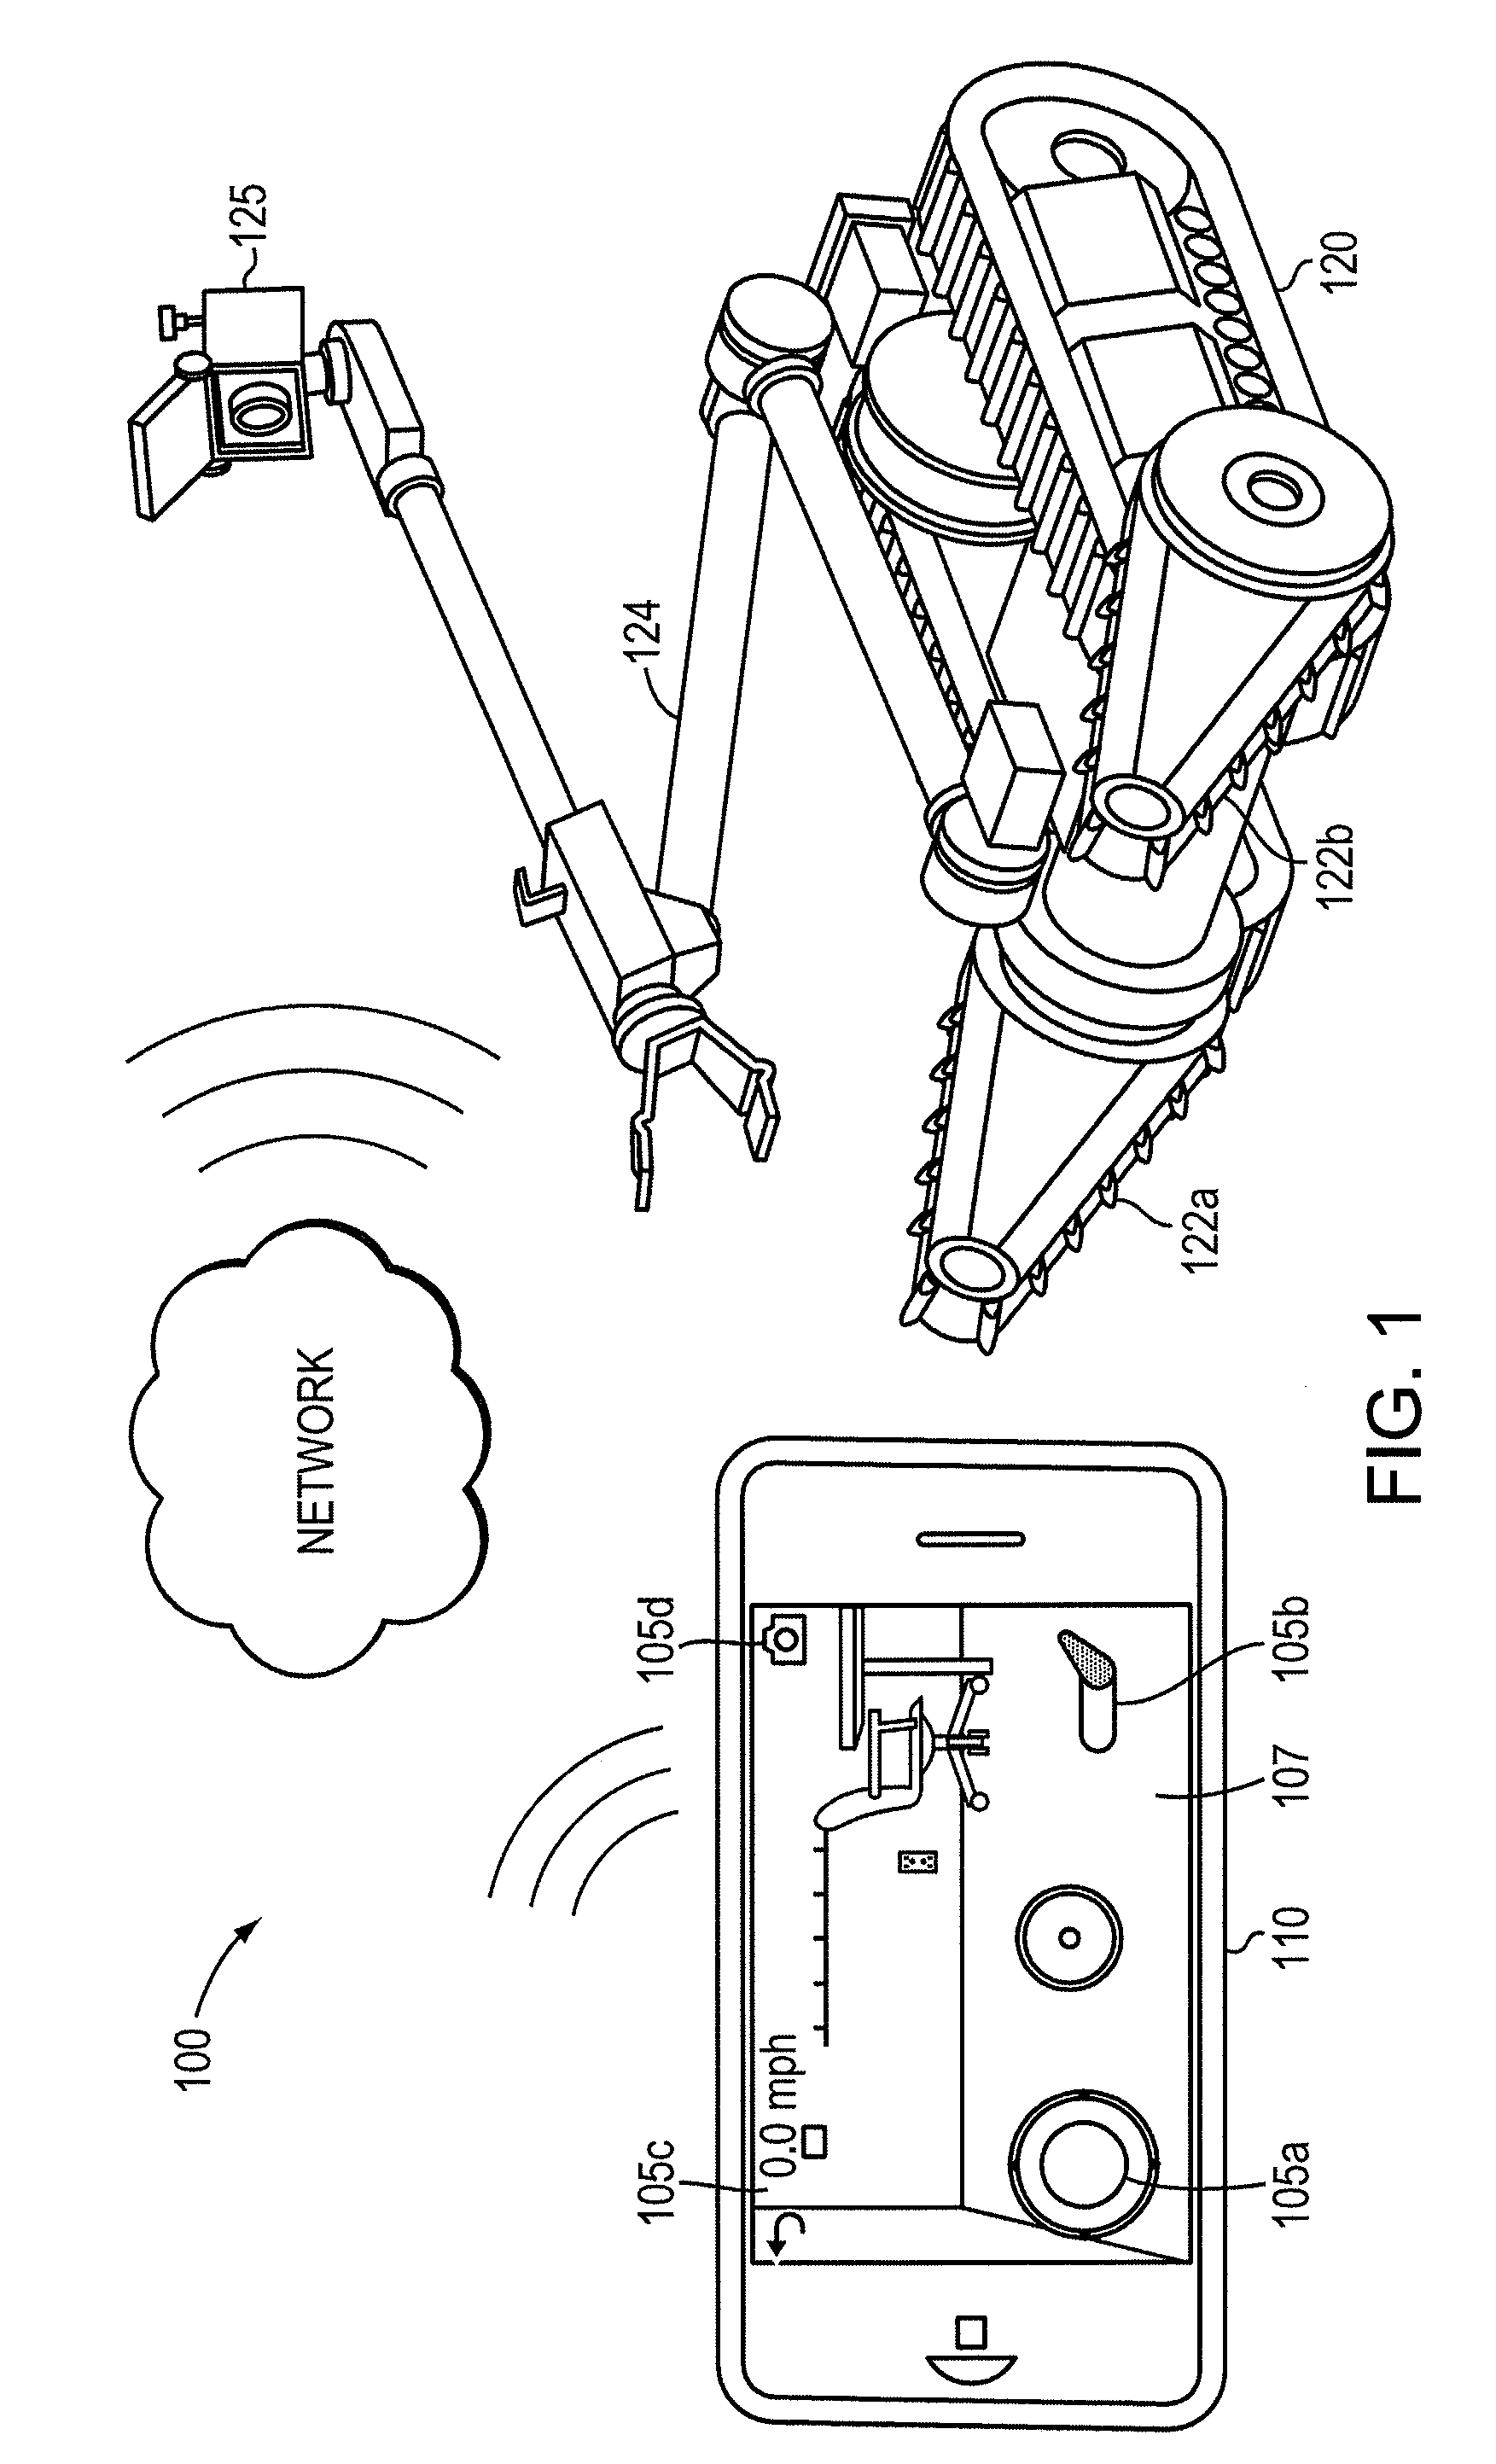 Teleoperation of Unmanned Ground Vehicle